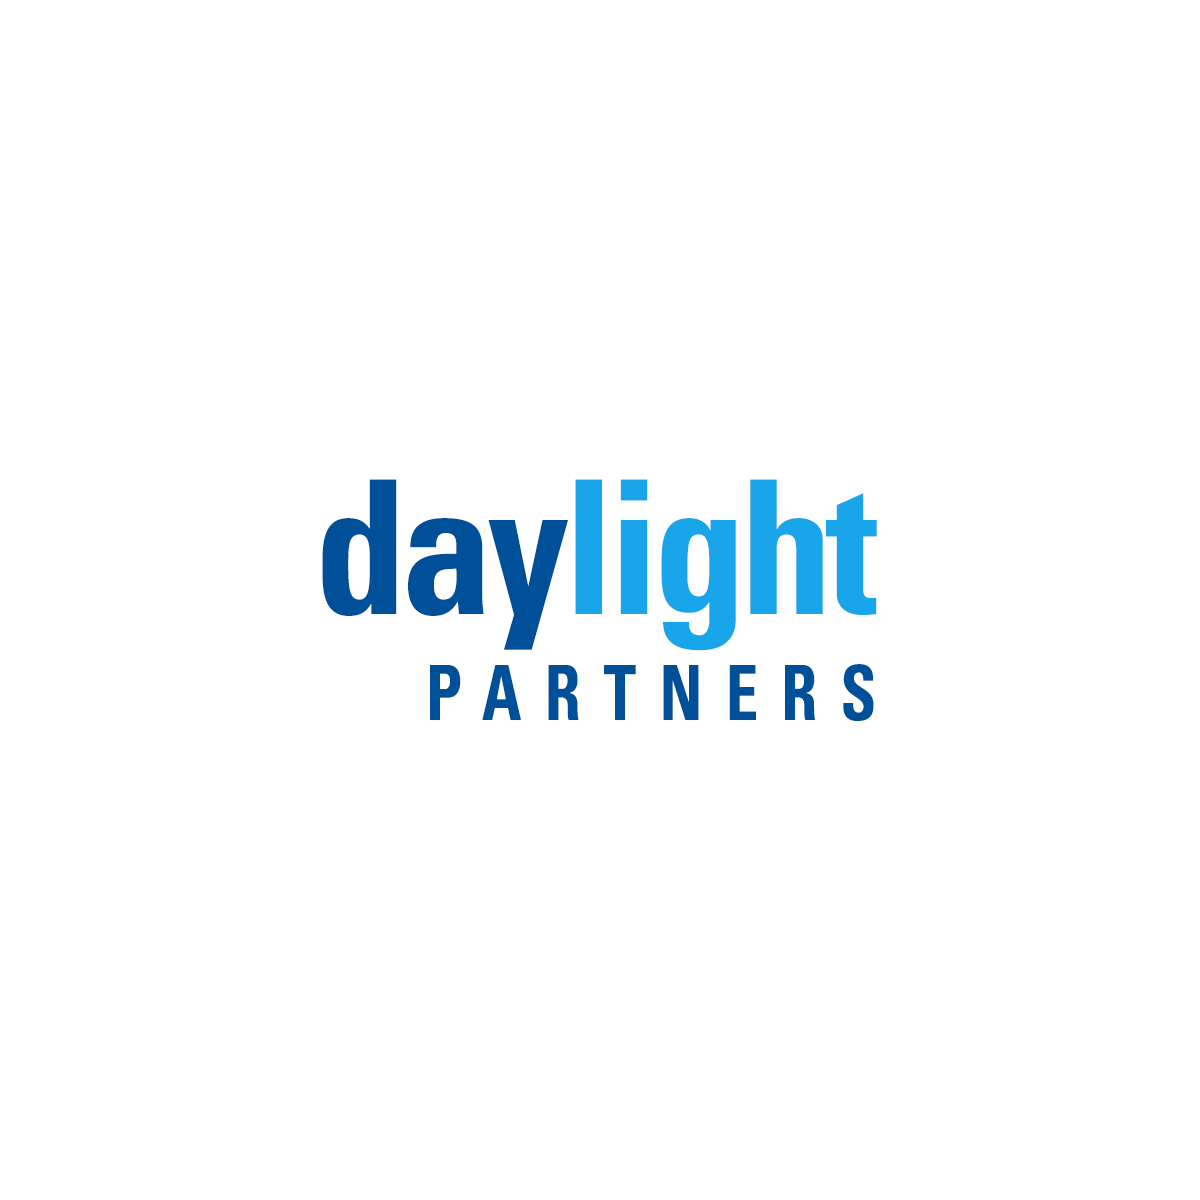 Daylight Partners